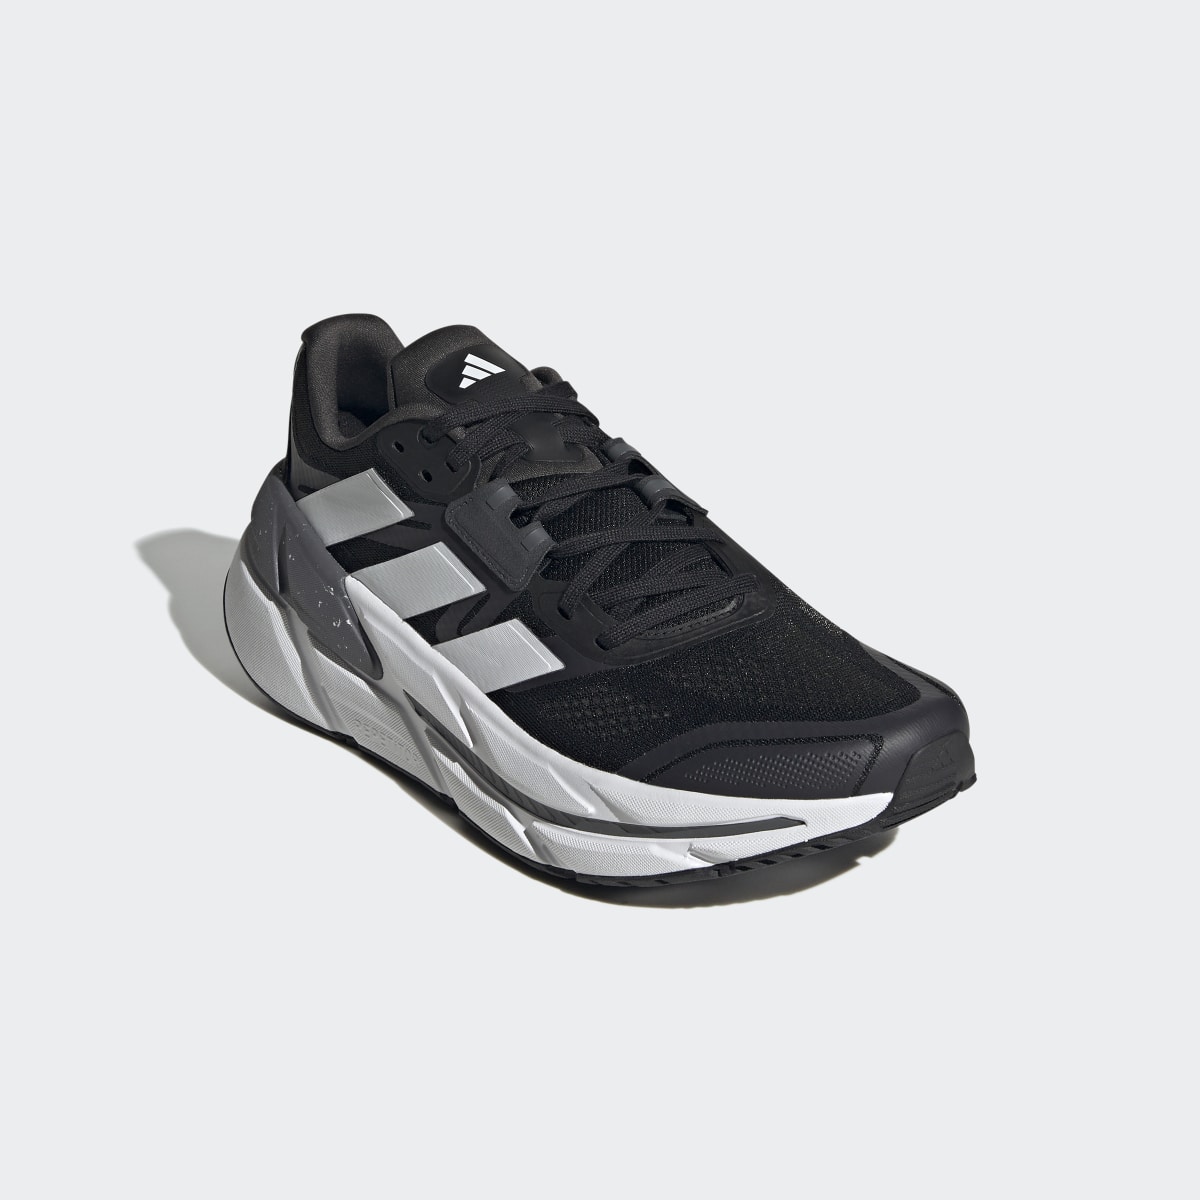 Adidas Adistar CS Running Shoes. 8